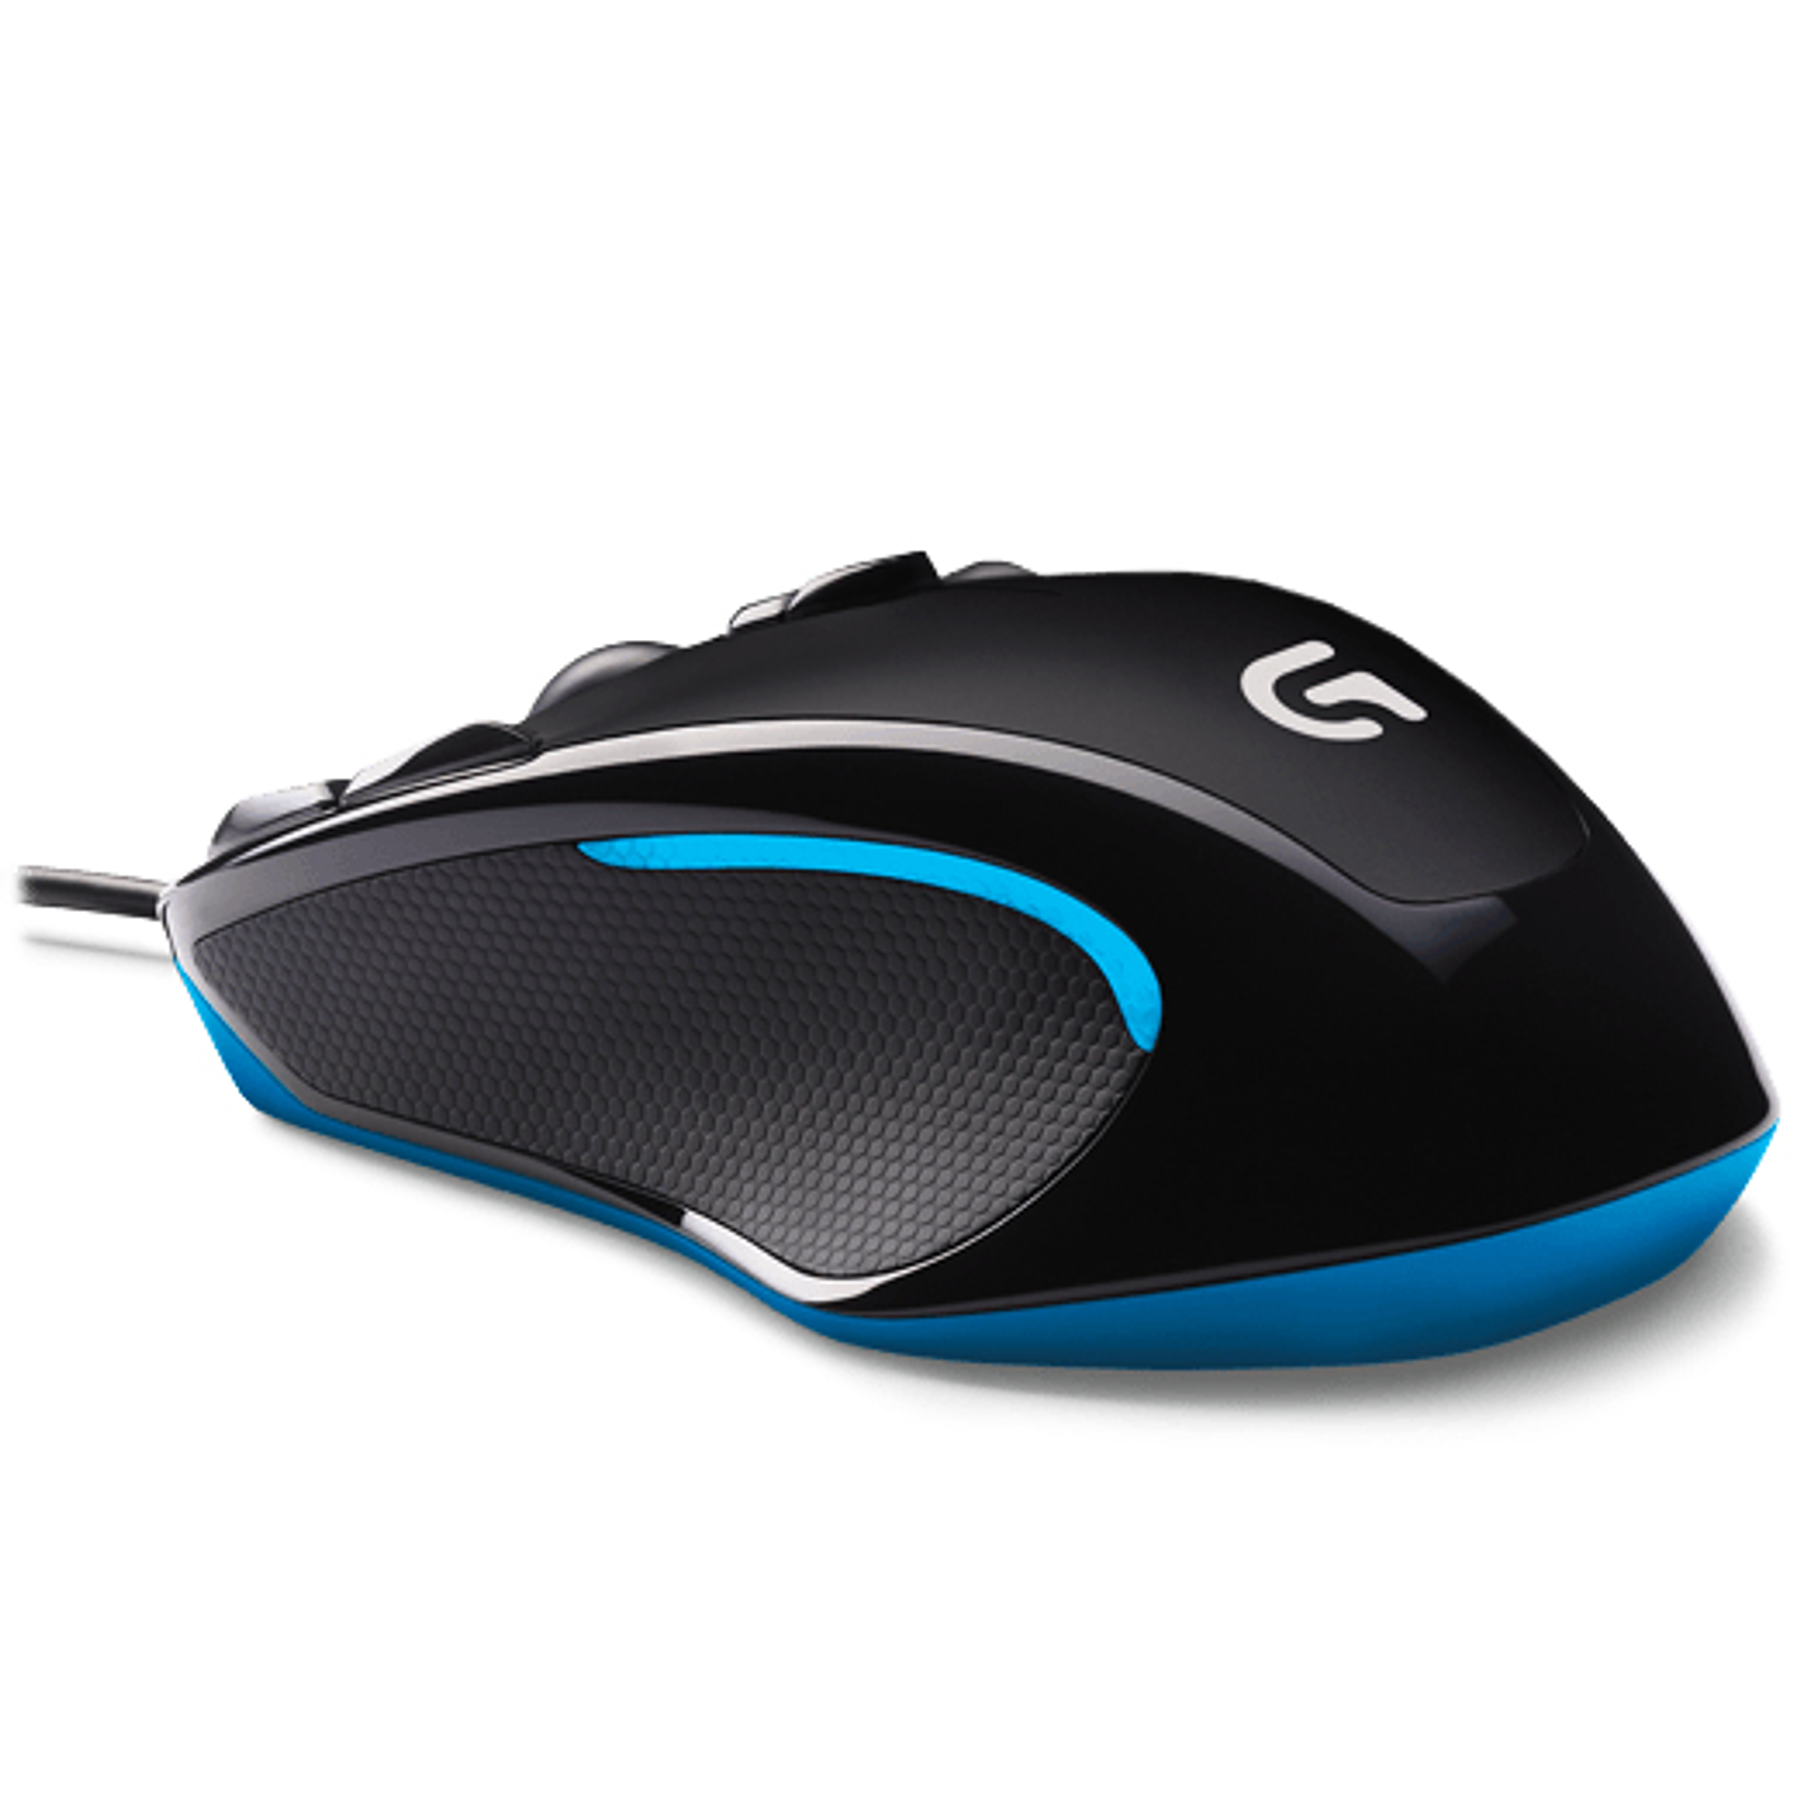 Logitech Mouse Gaming G300S Optical Black